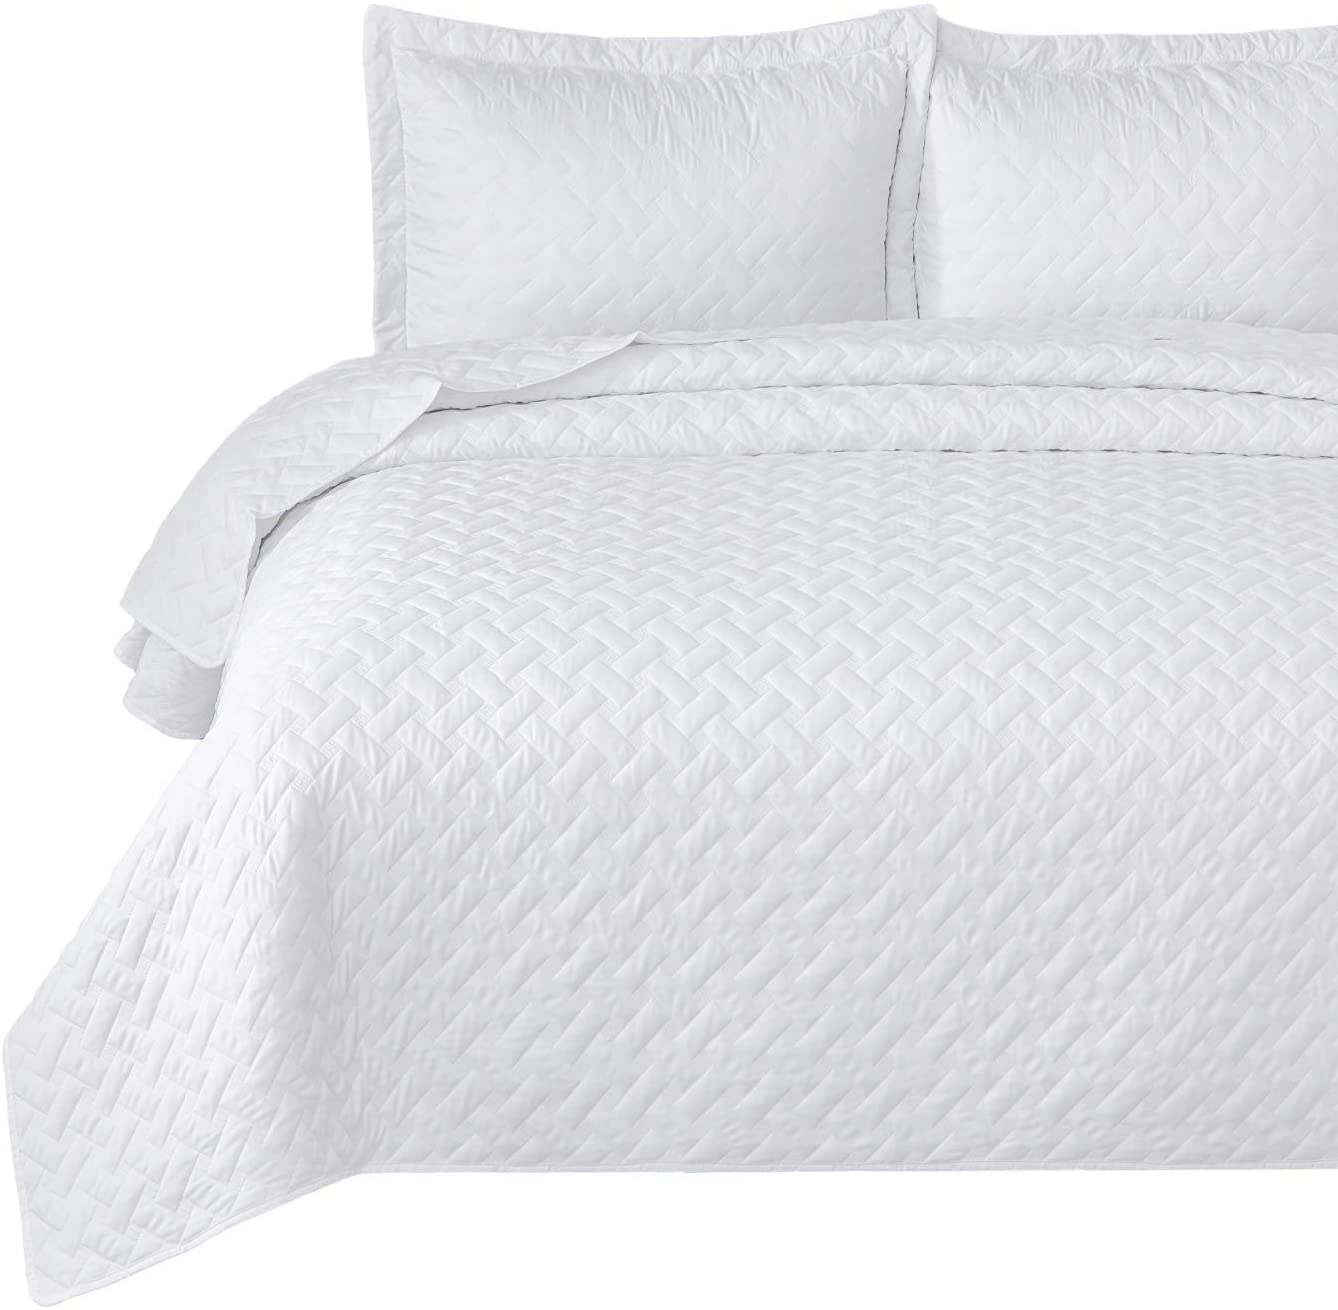 queen bed quilt basketweave pattern white duvet all season